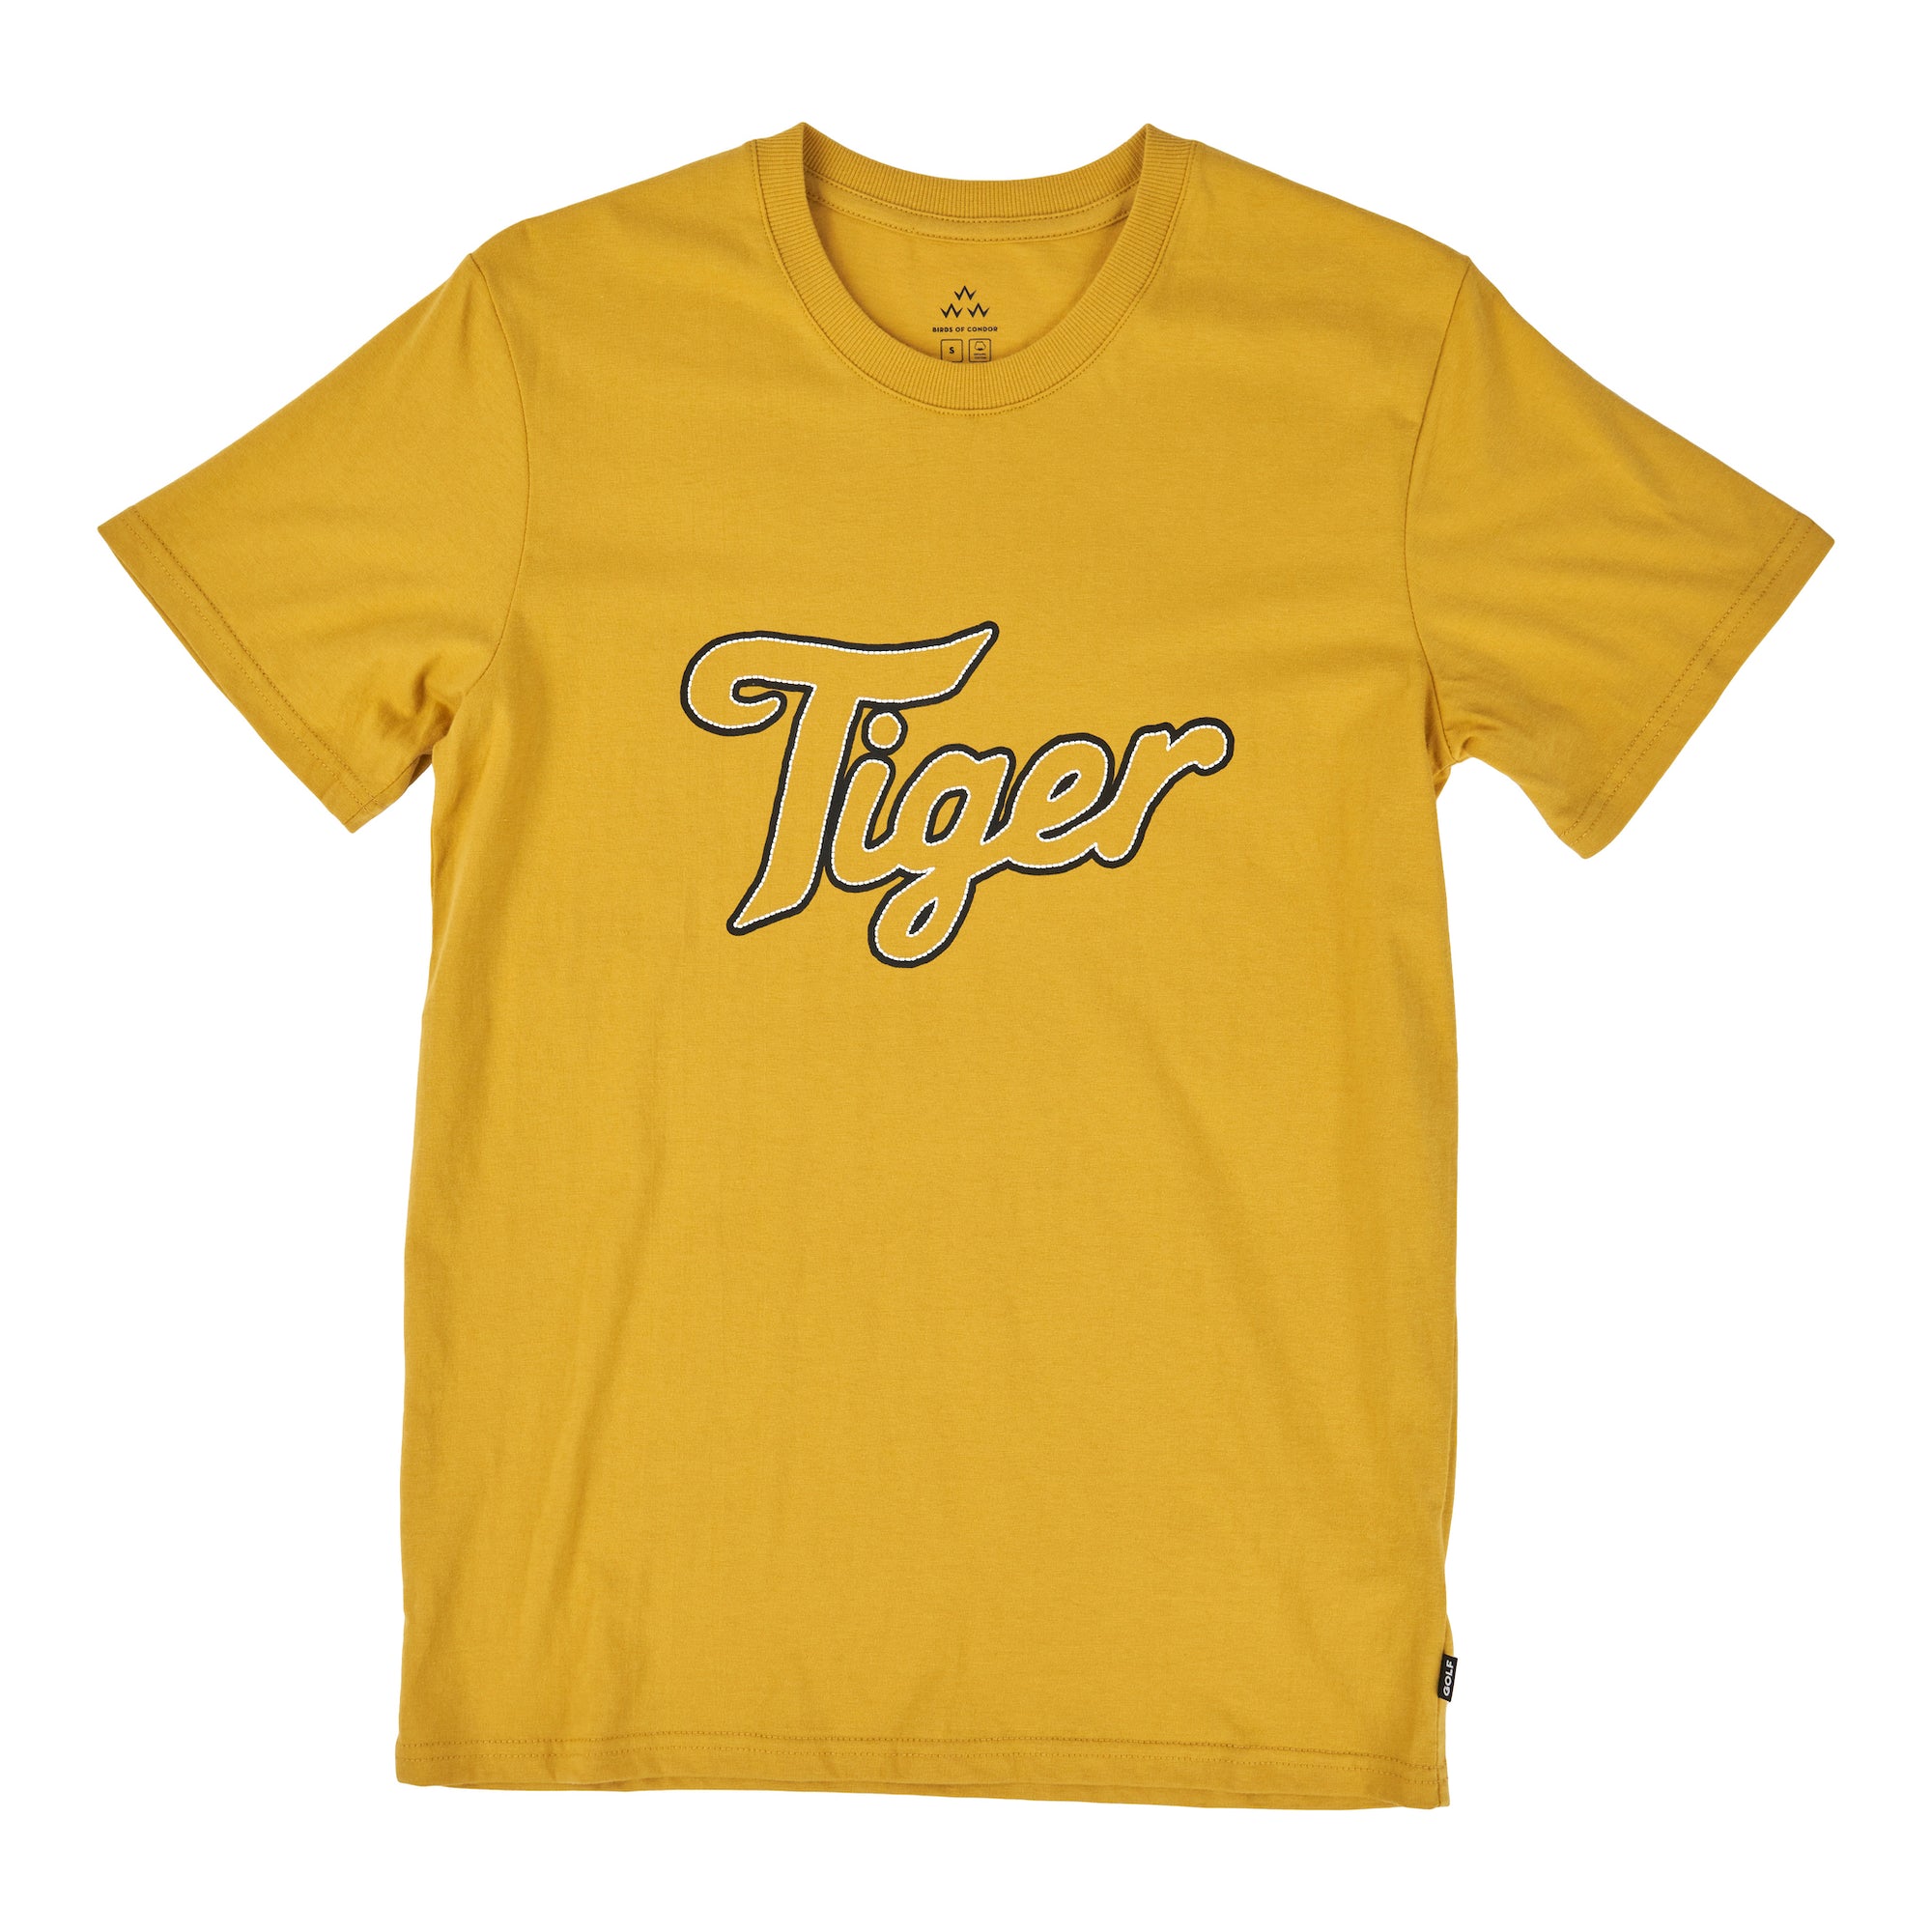 birds of condor yellow organic cotton tiger golf tee shirt